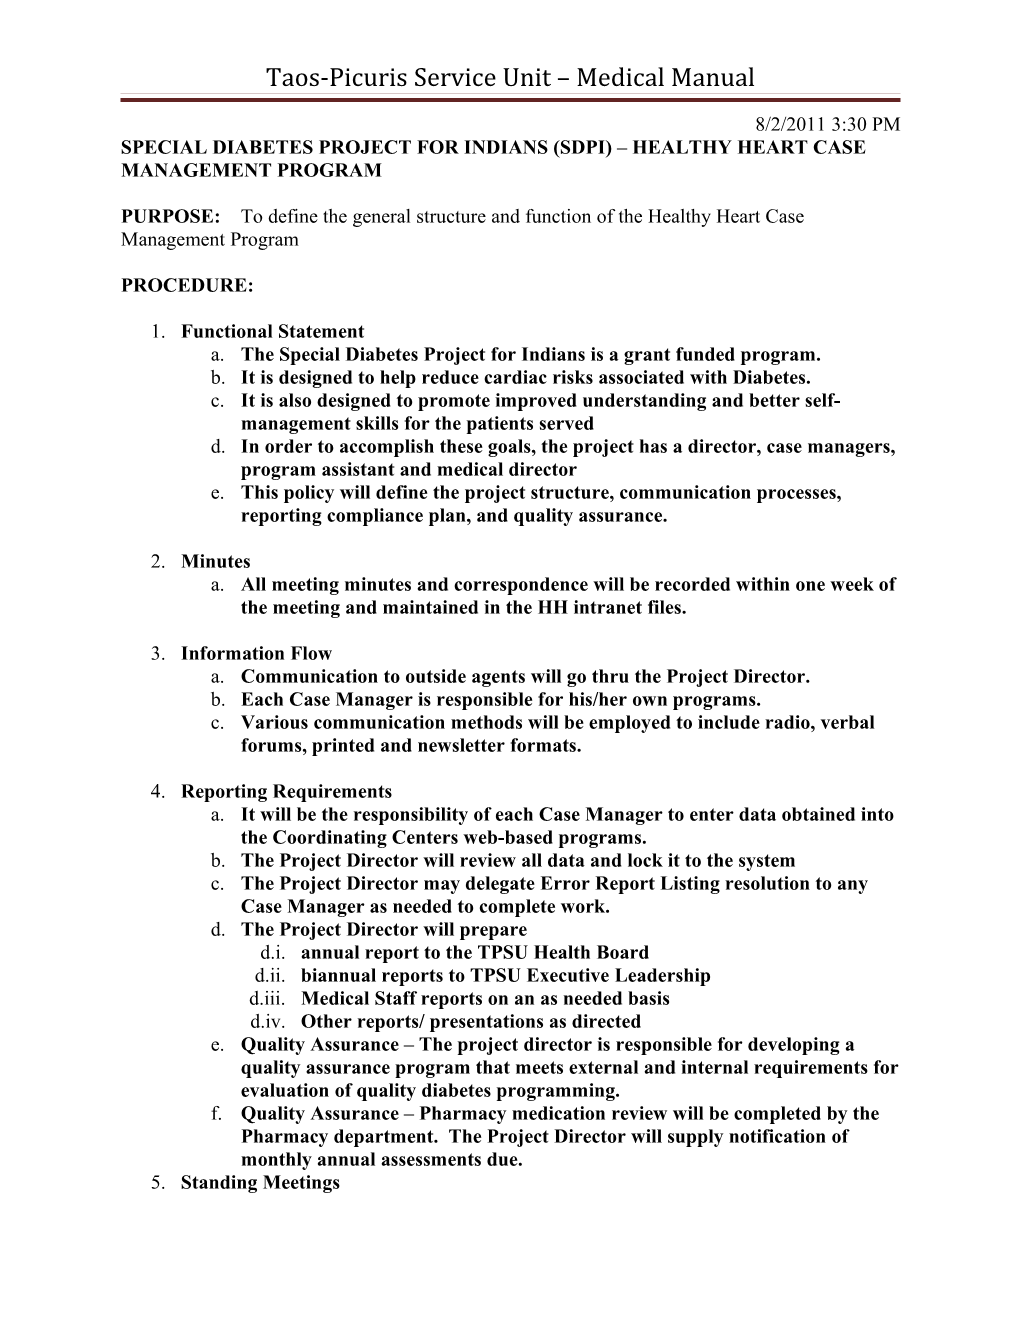 Taos-Picuris Service Unit Medical Manual